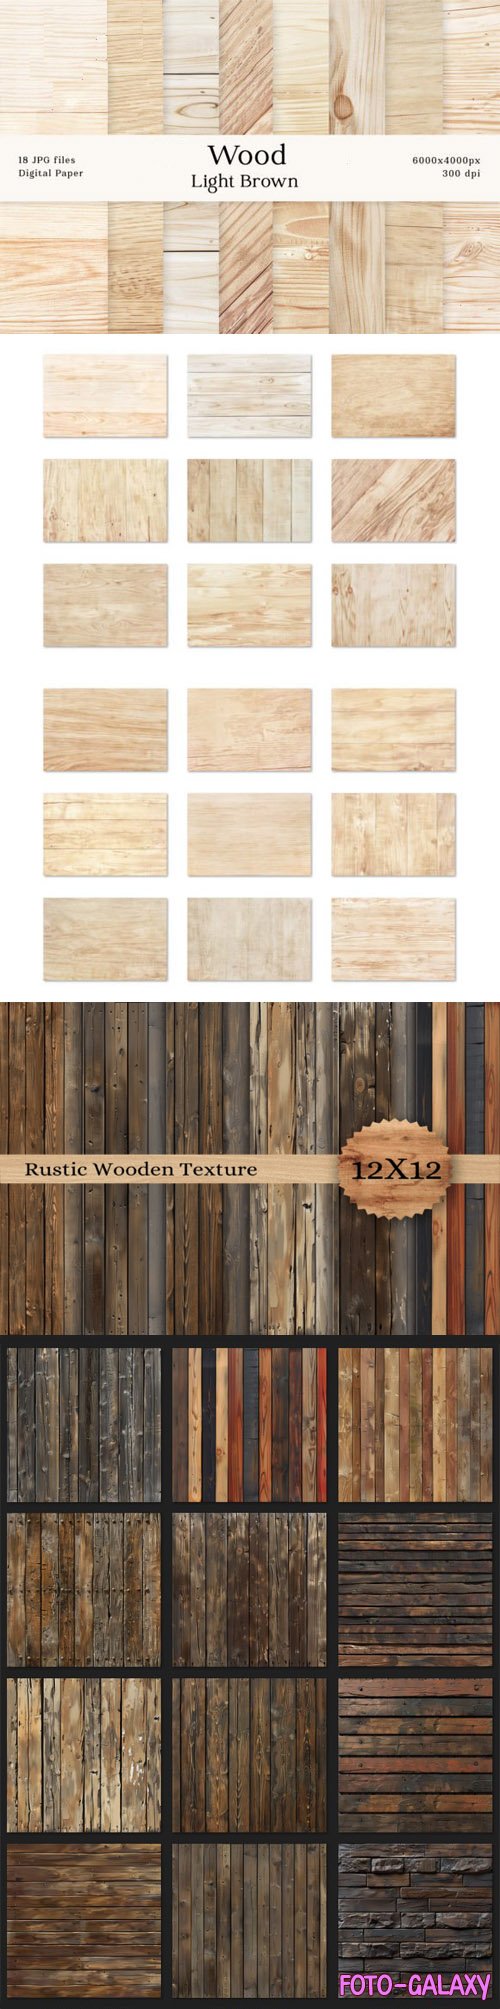 30+ Wooden Textures Pack